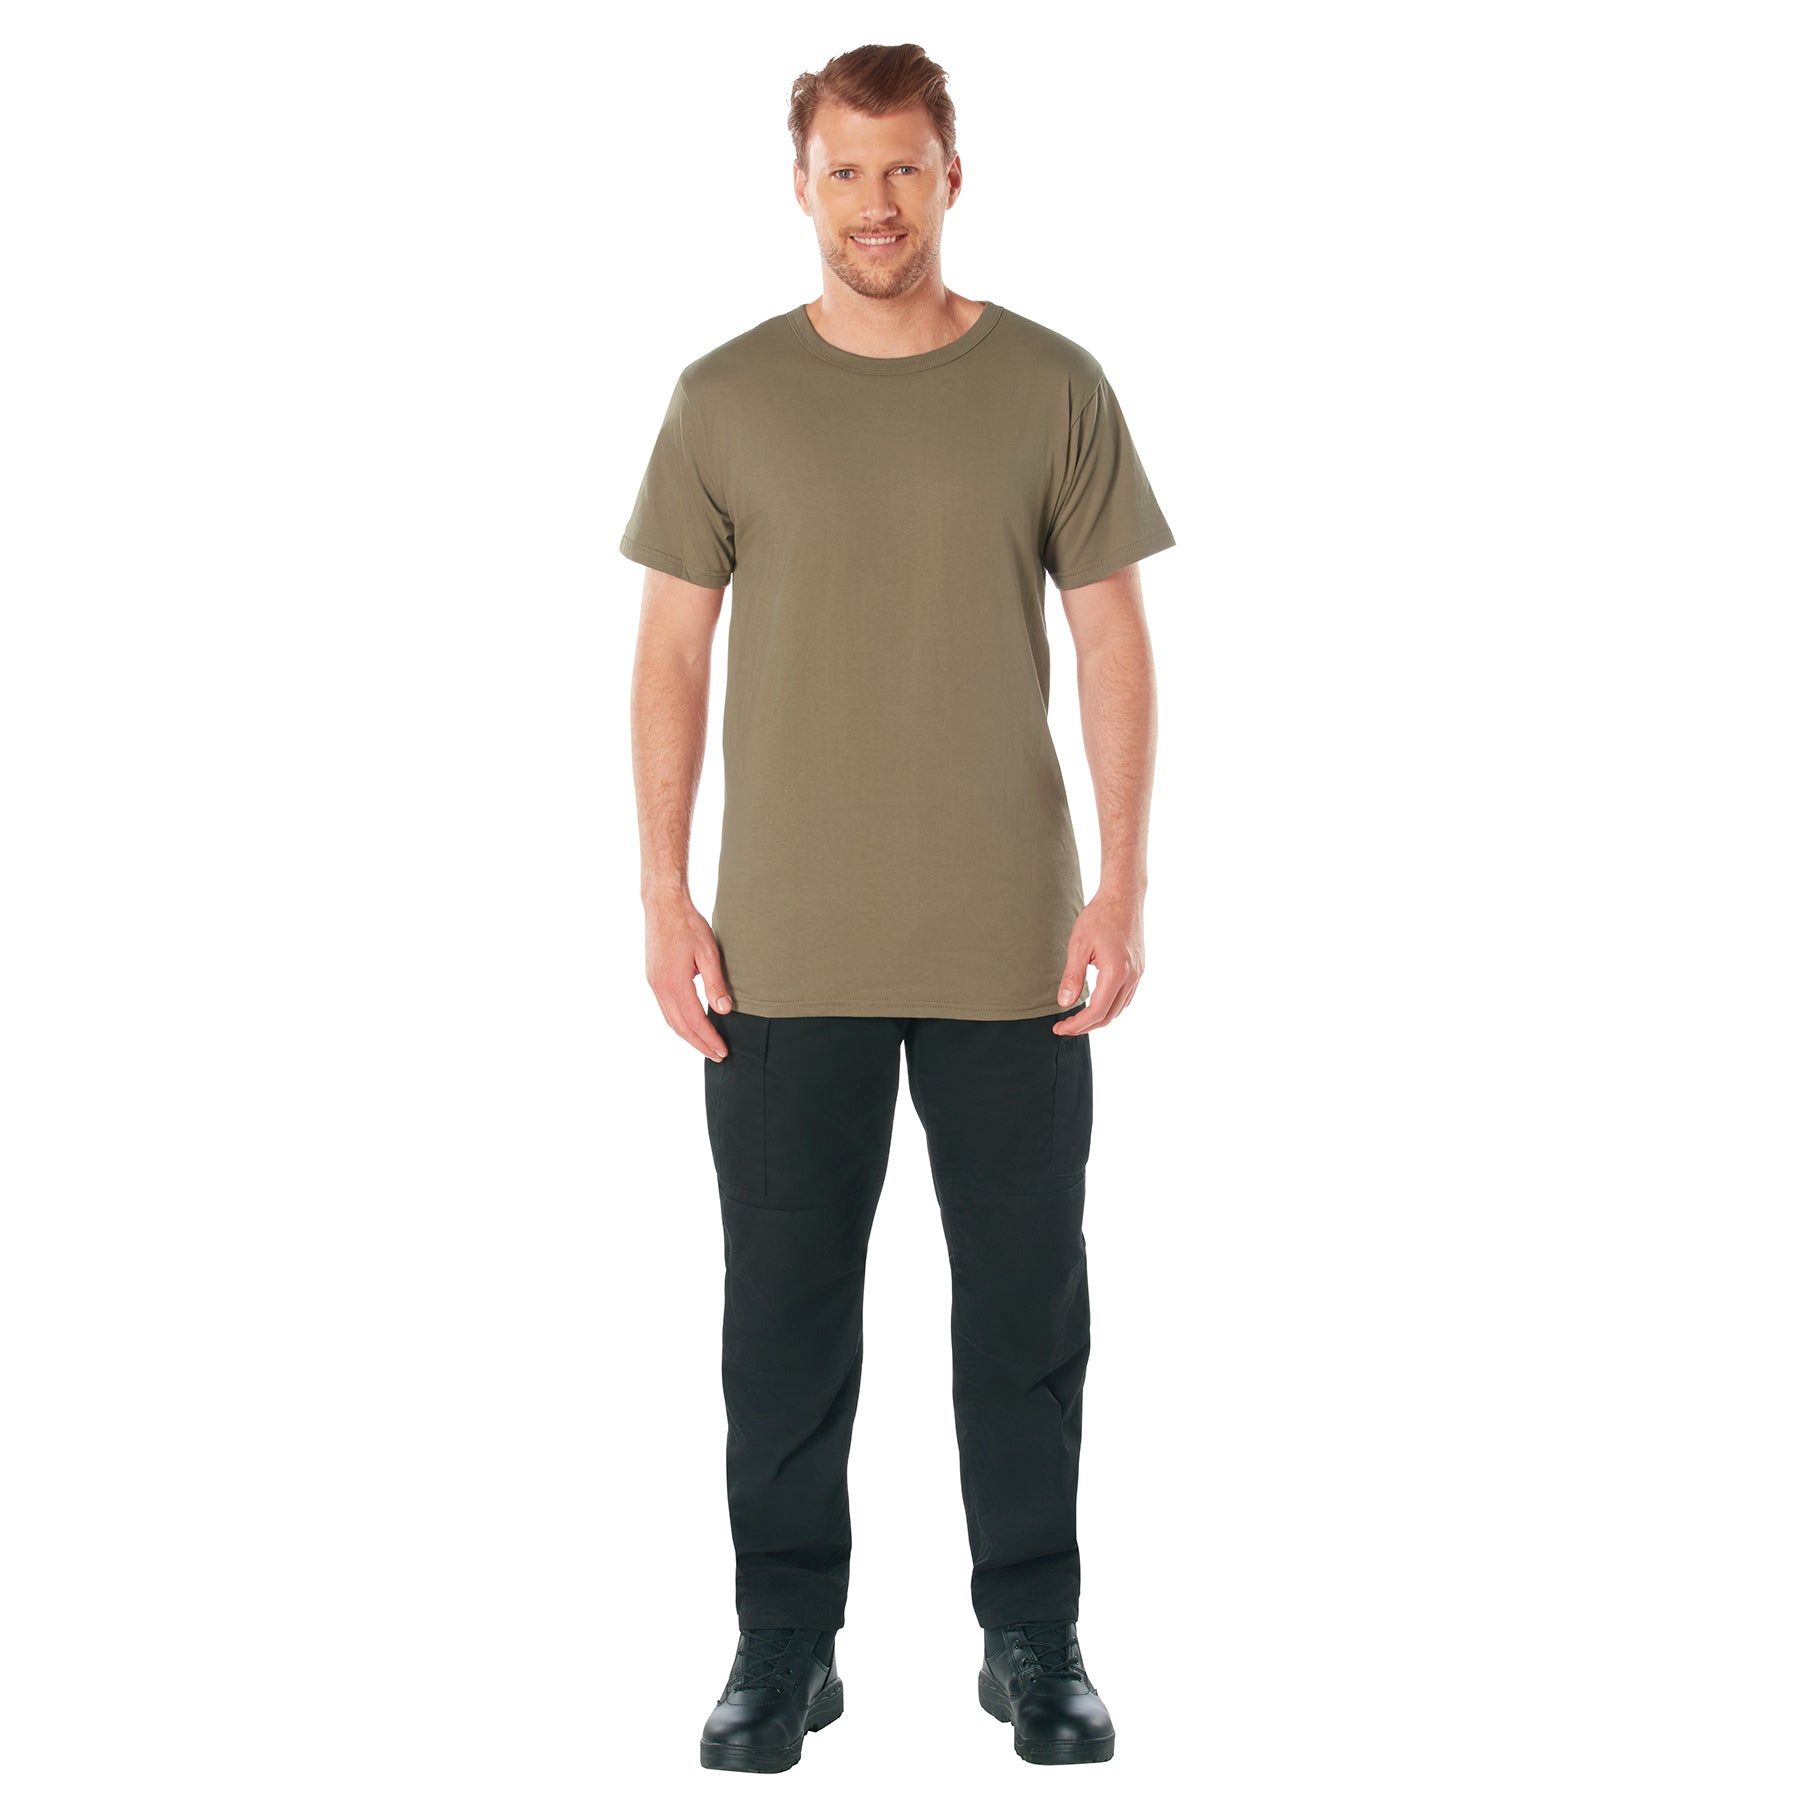 [AR 670-1][Military] Cotton T-Shirts